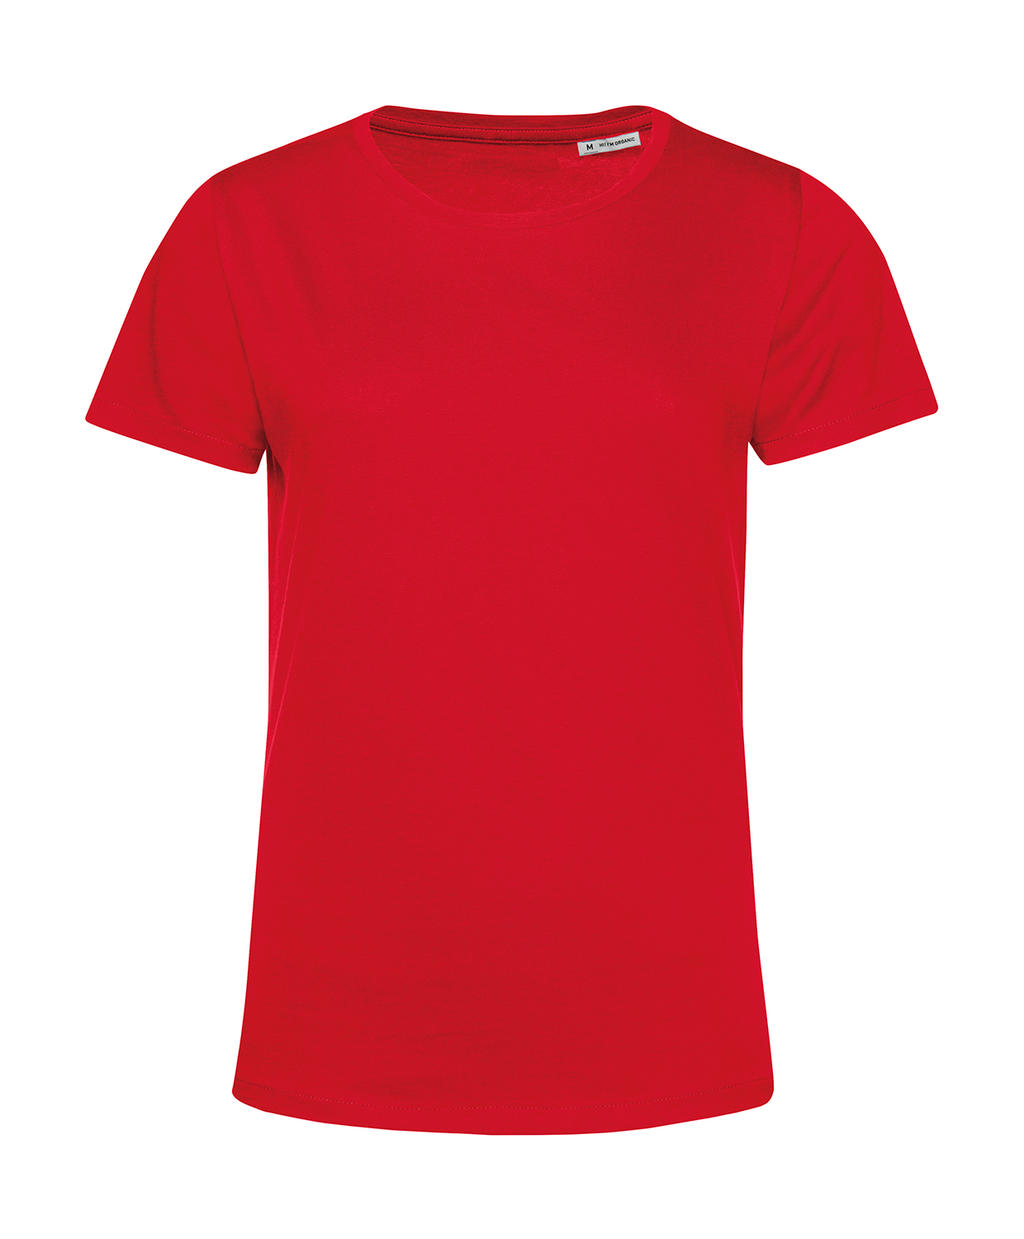 Tričko dámské BC Organic Inspire E150 - červené, L